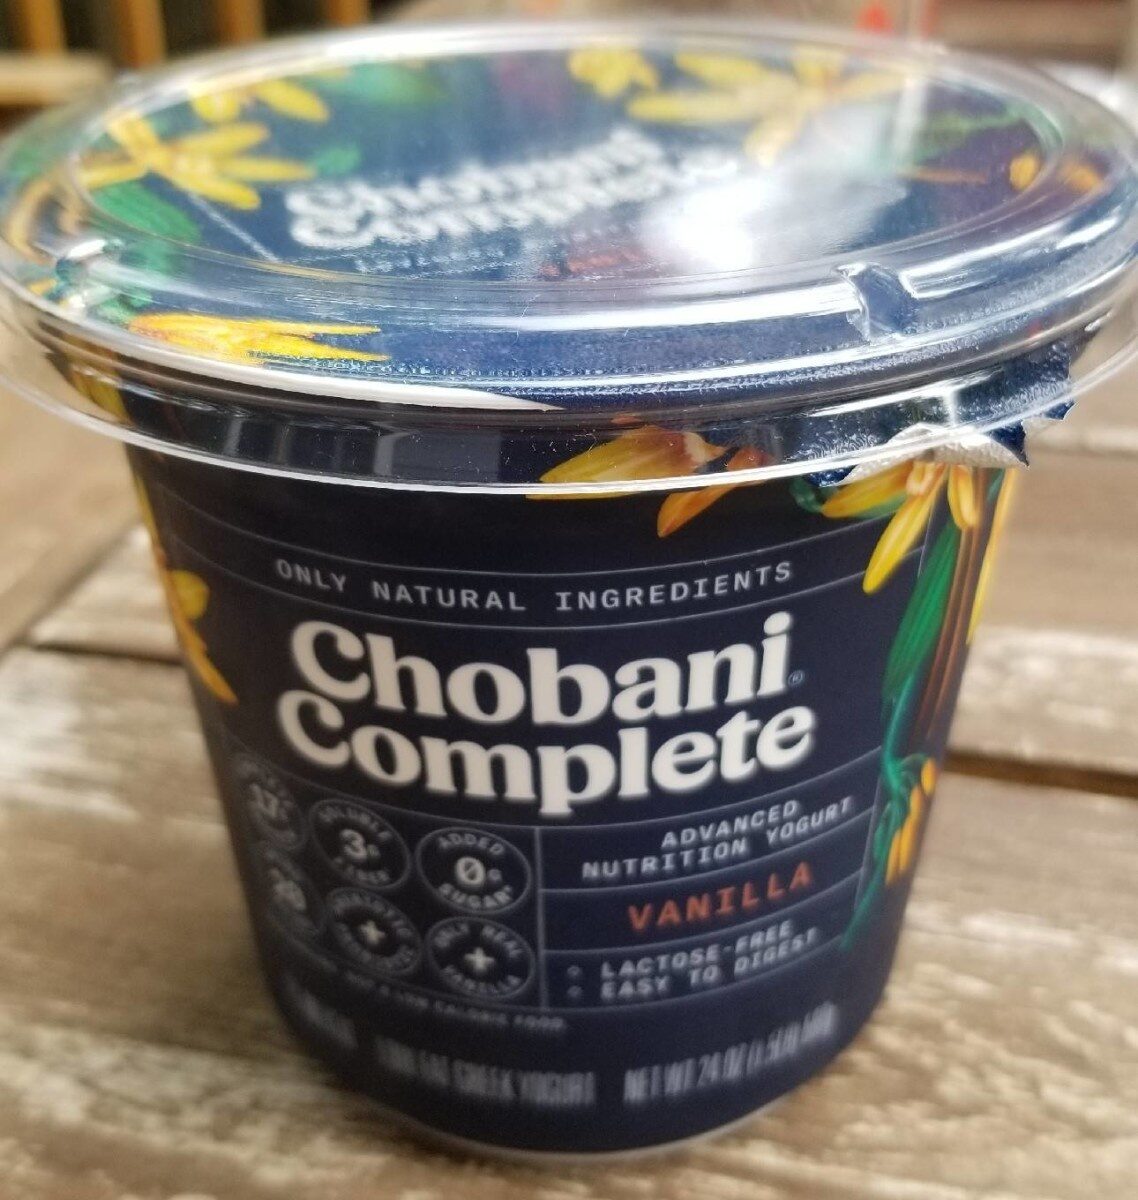 Chobani complete vanilla - Product